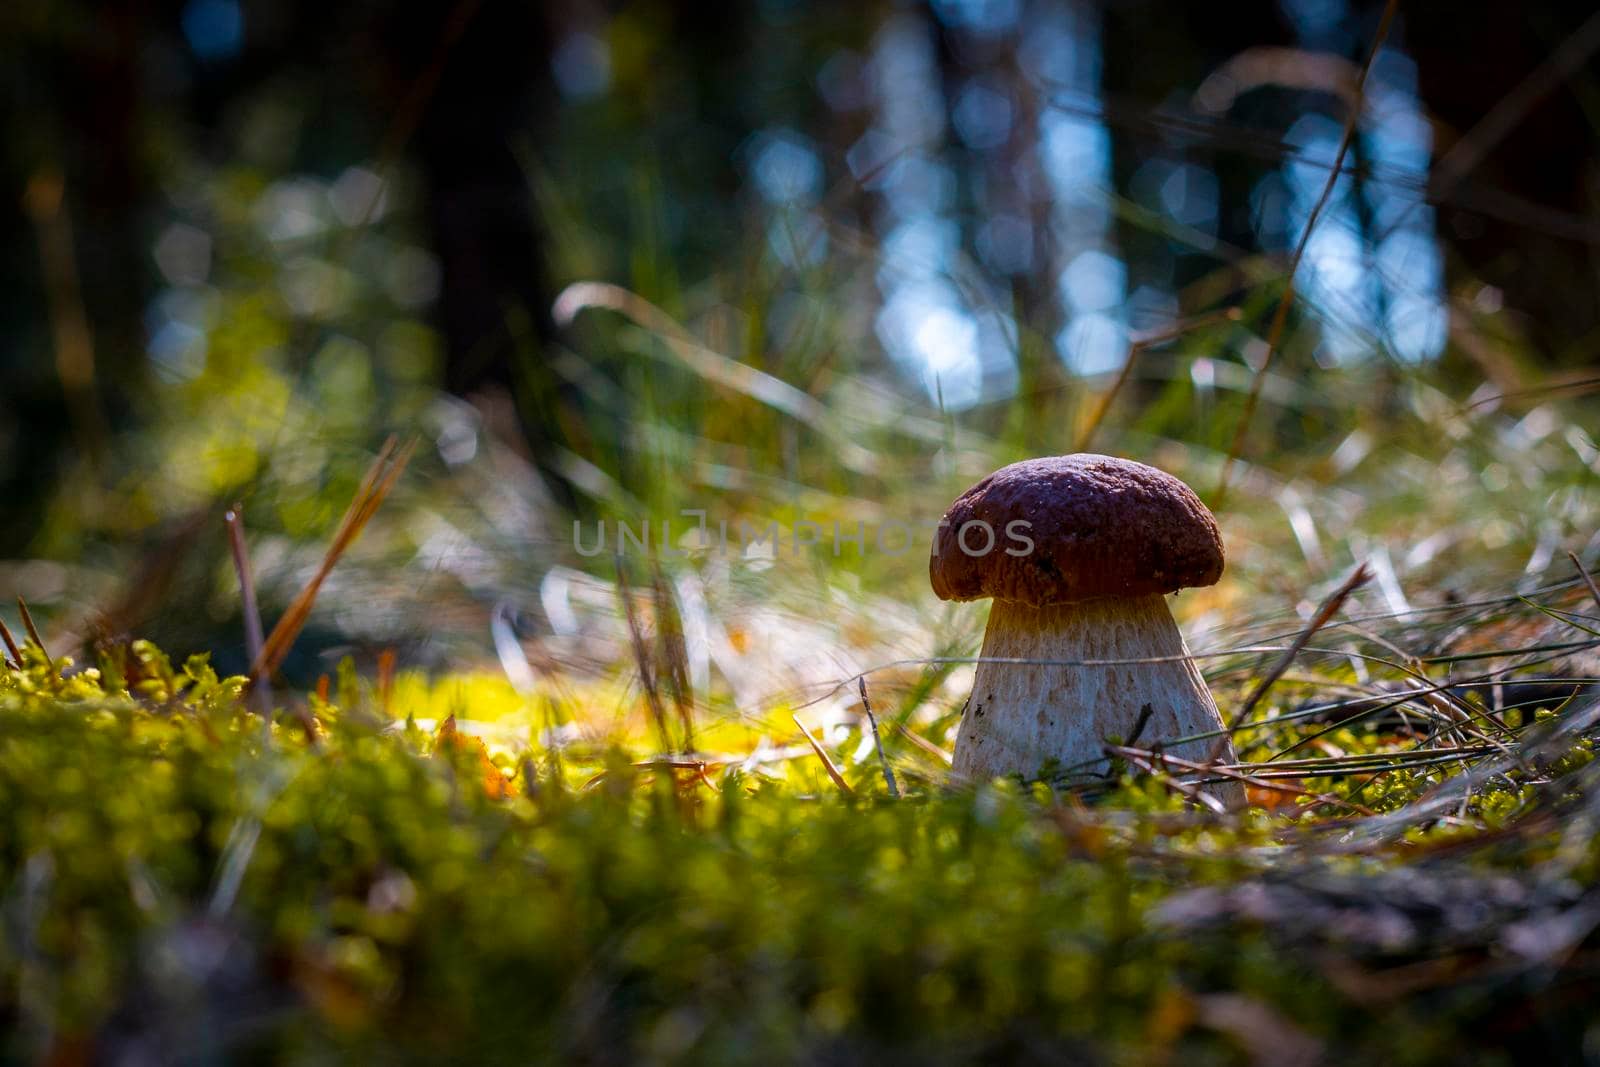 Brown cap big cep mushroom grow in wood. Royal porcini food in nature. Boletus growing in wild forest